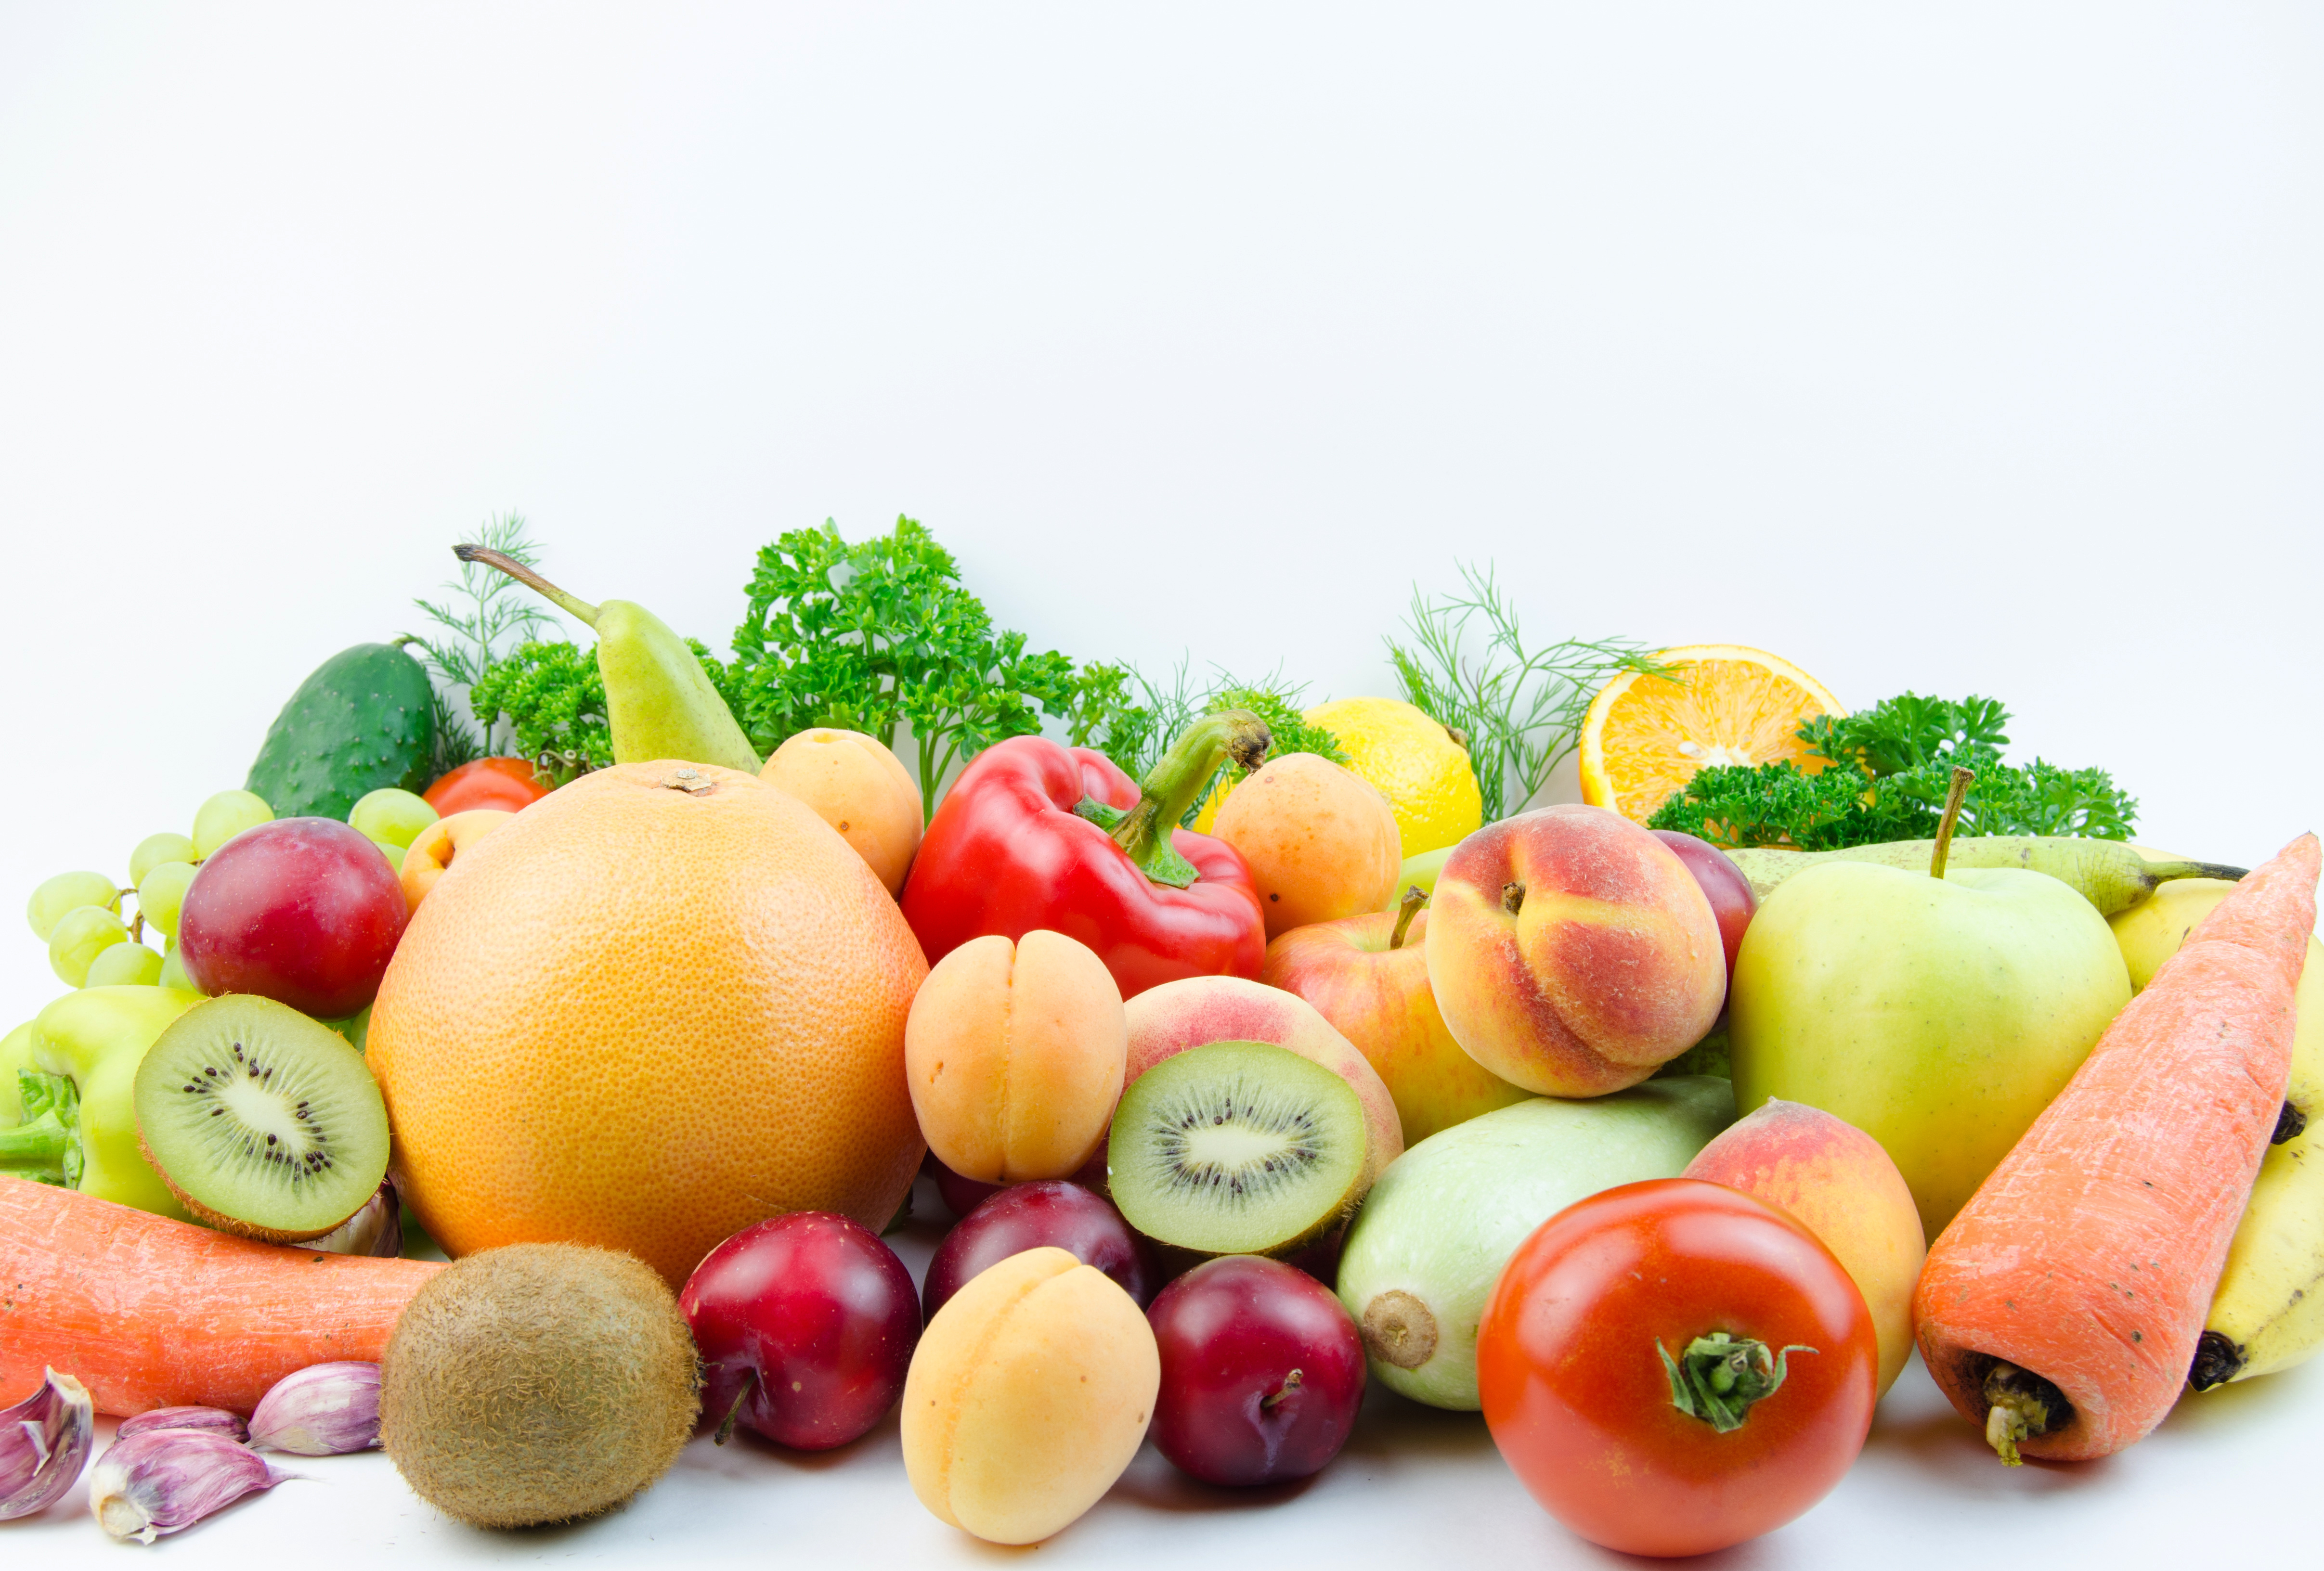 Wordwall vegetables. Овощи и фрукты. Свежие овощи и фрукты. Красивые овощи. Сочные овощи.